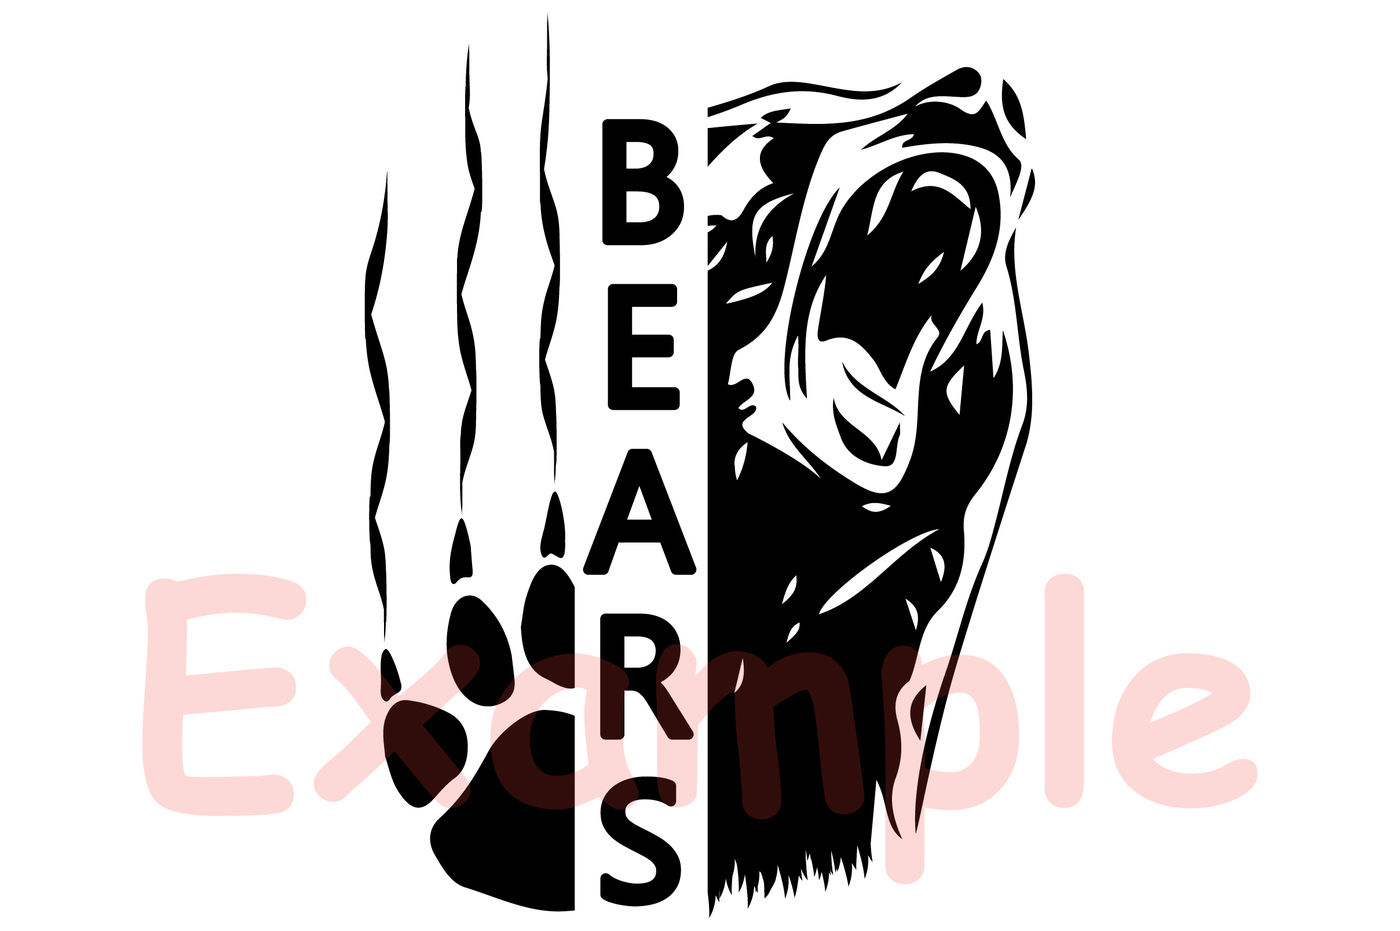 Chicago Bears Logo embroidery design